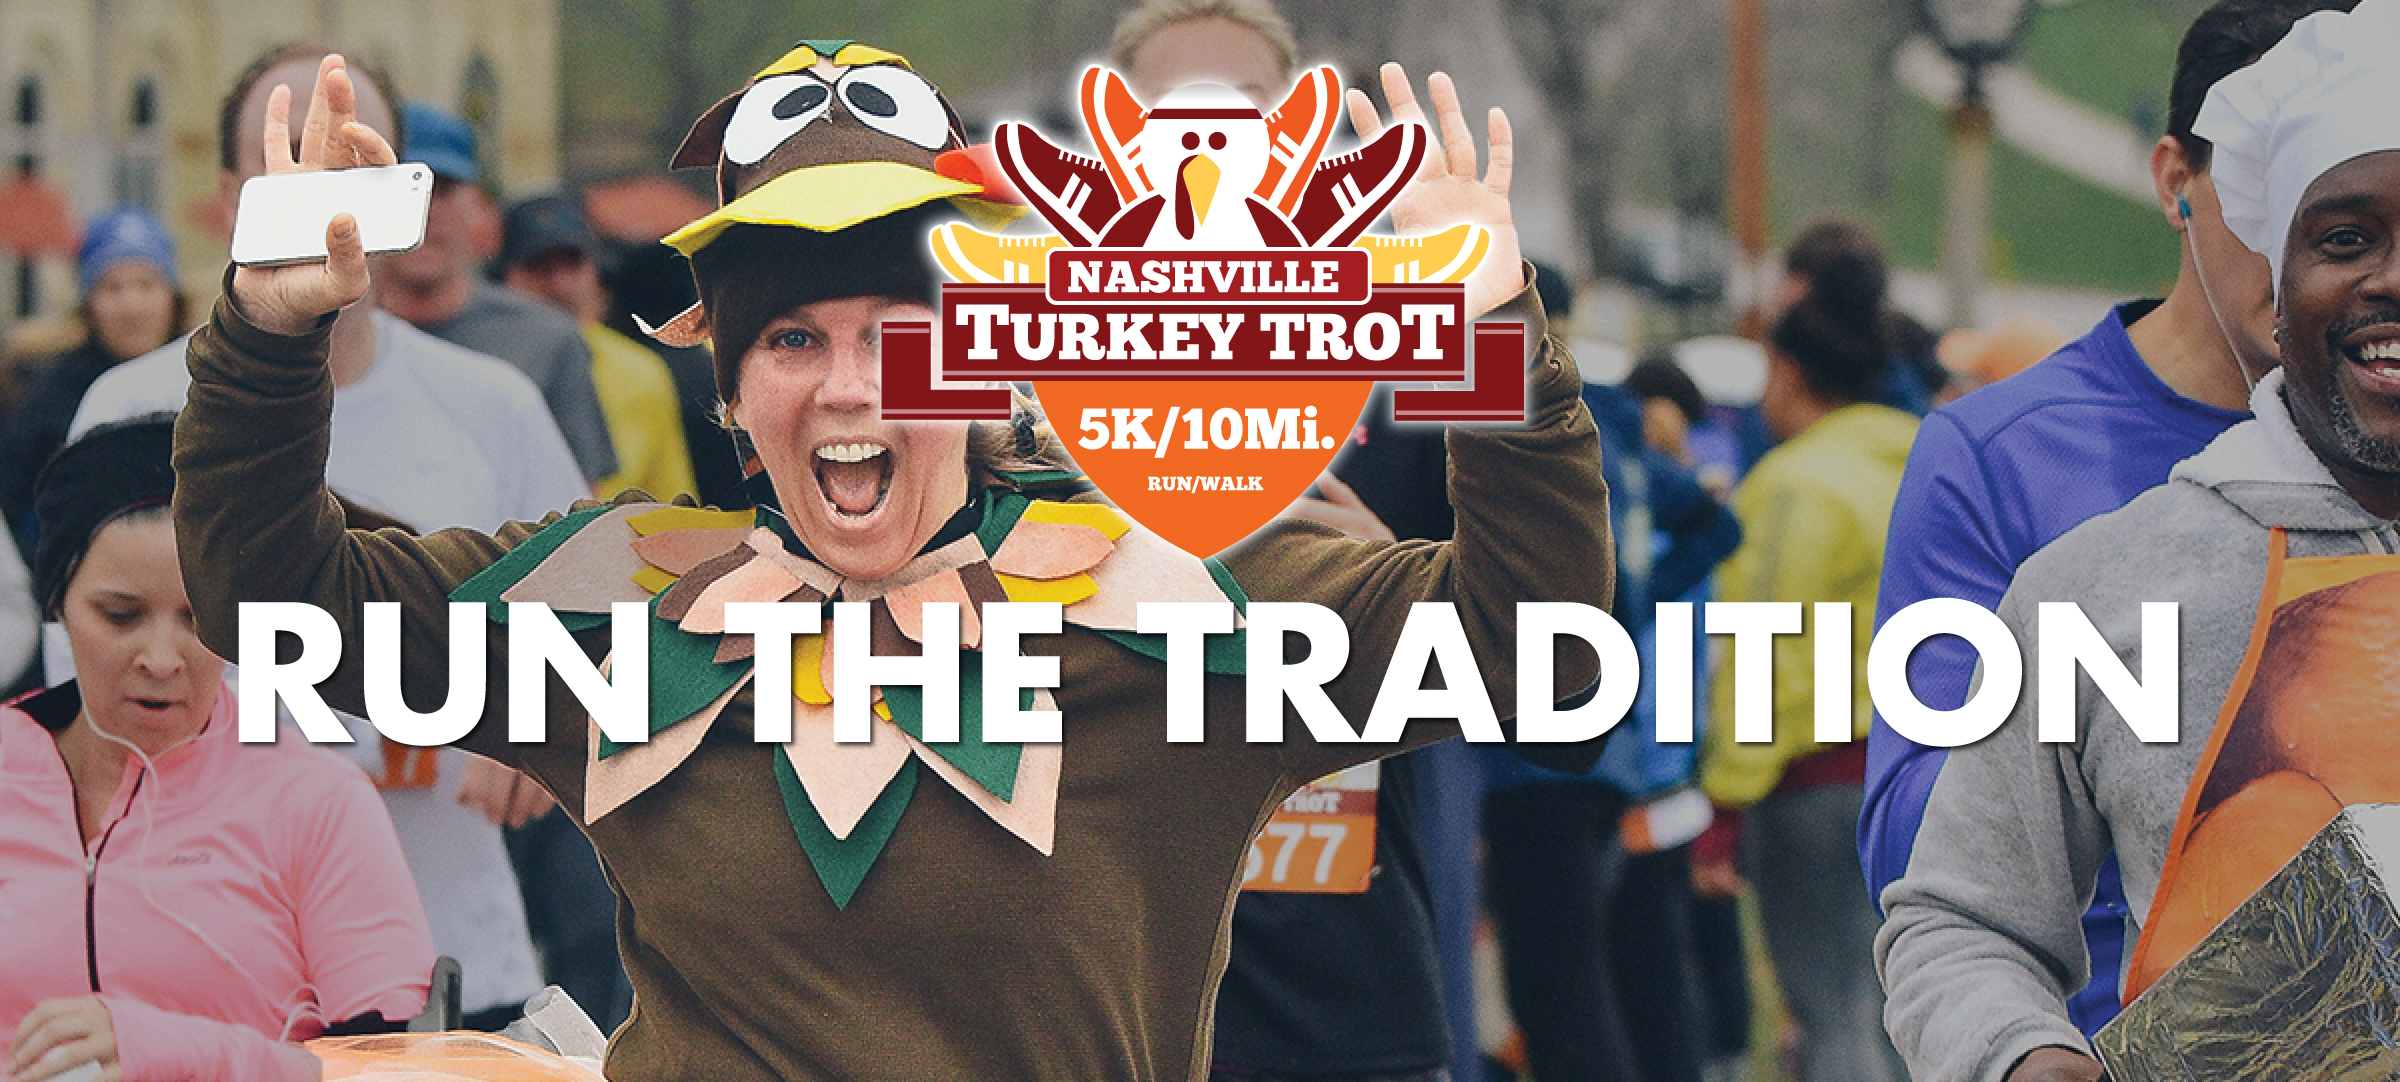 Nashville Turkey Trot